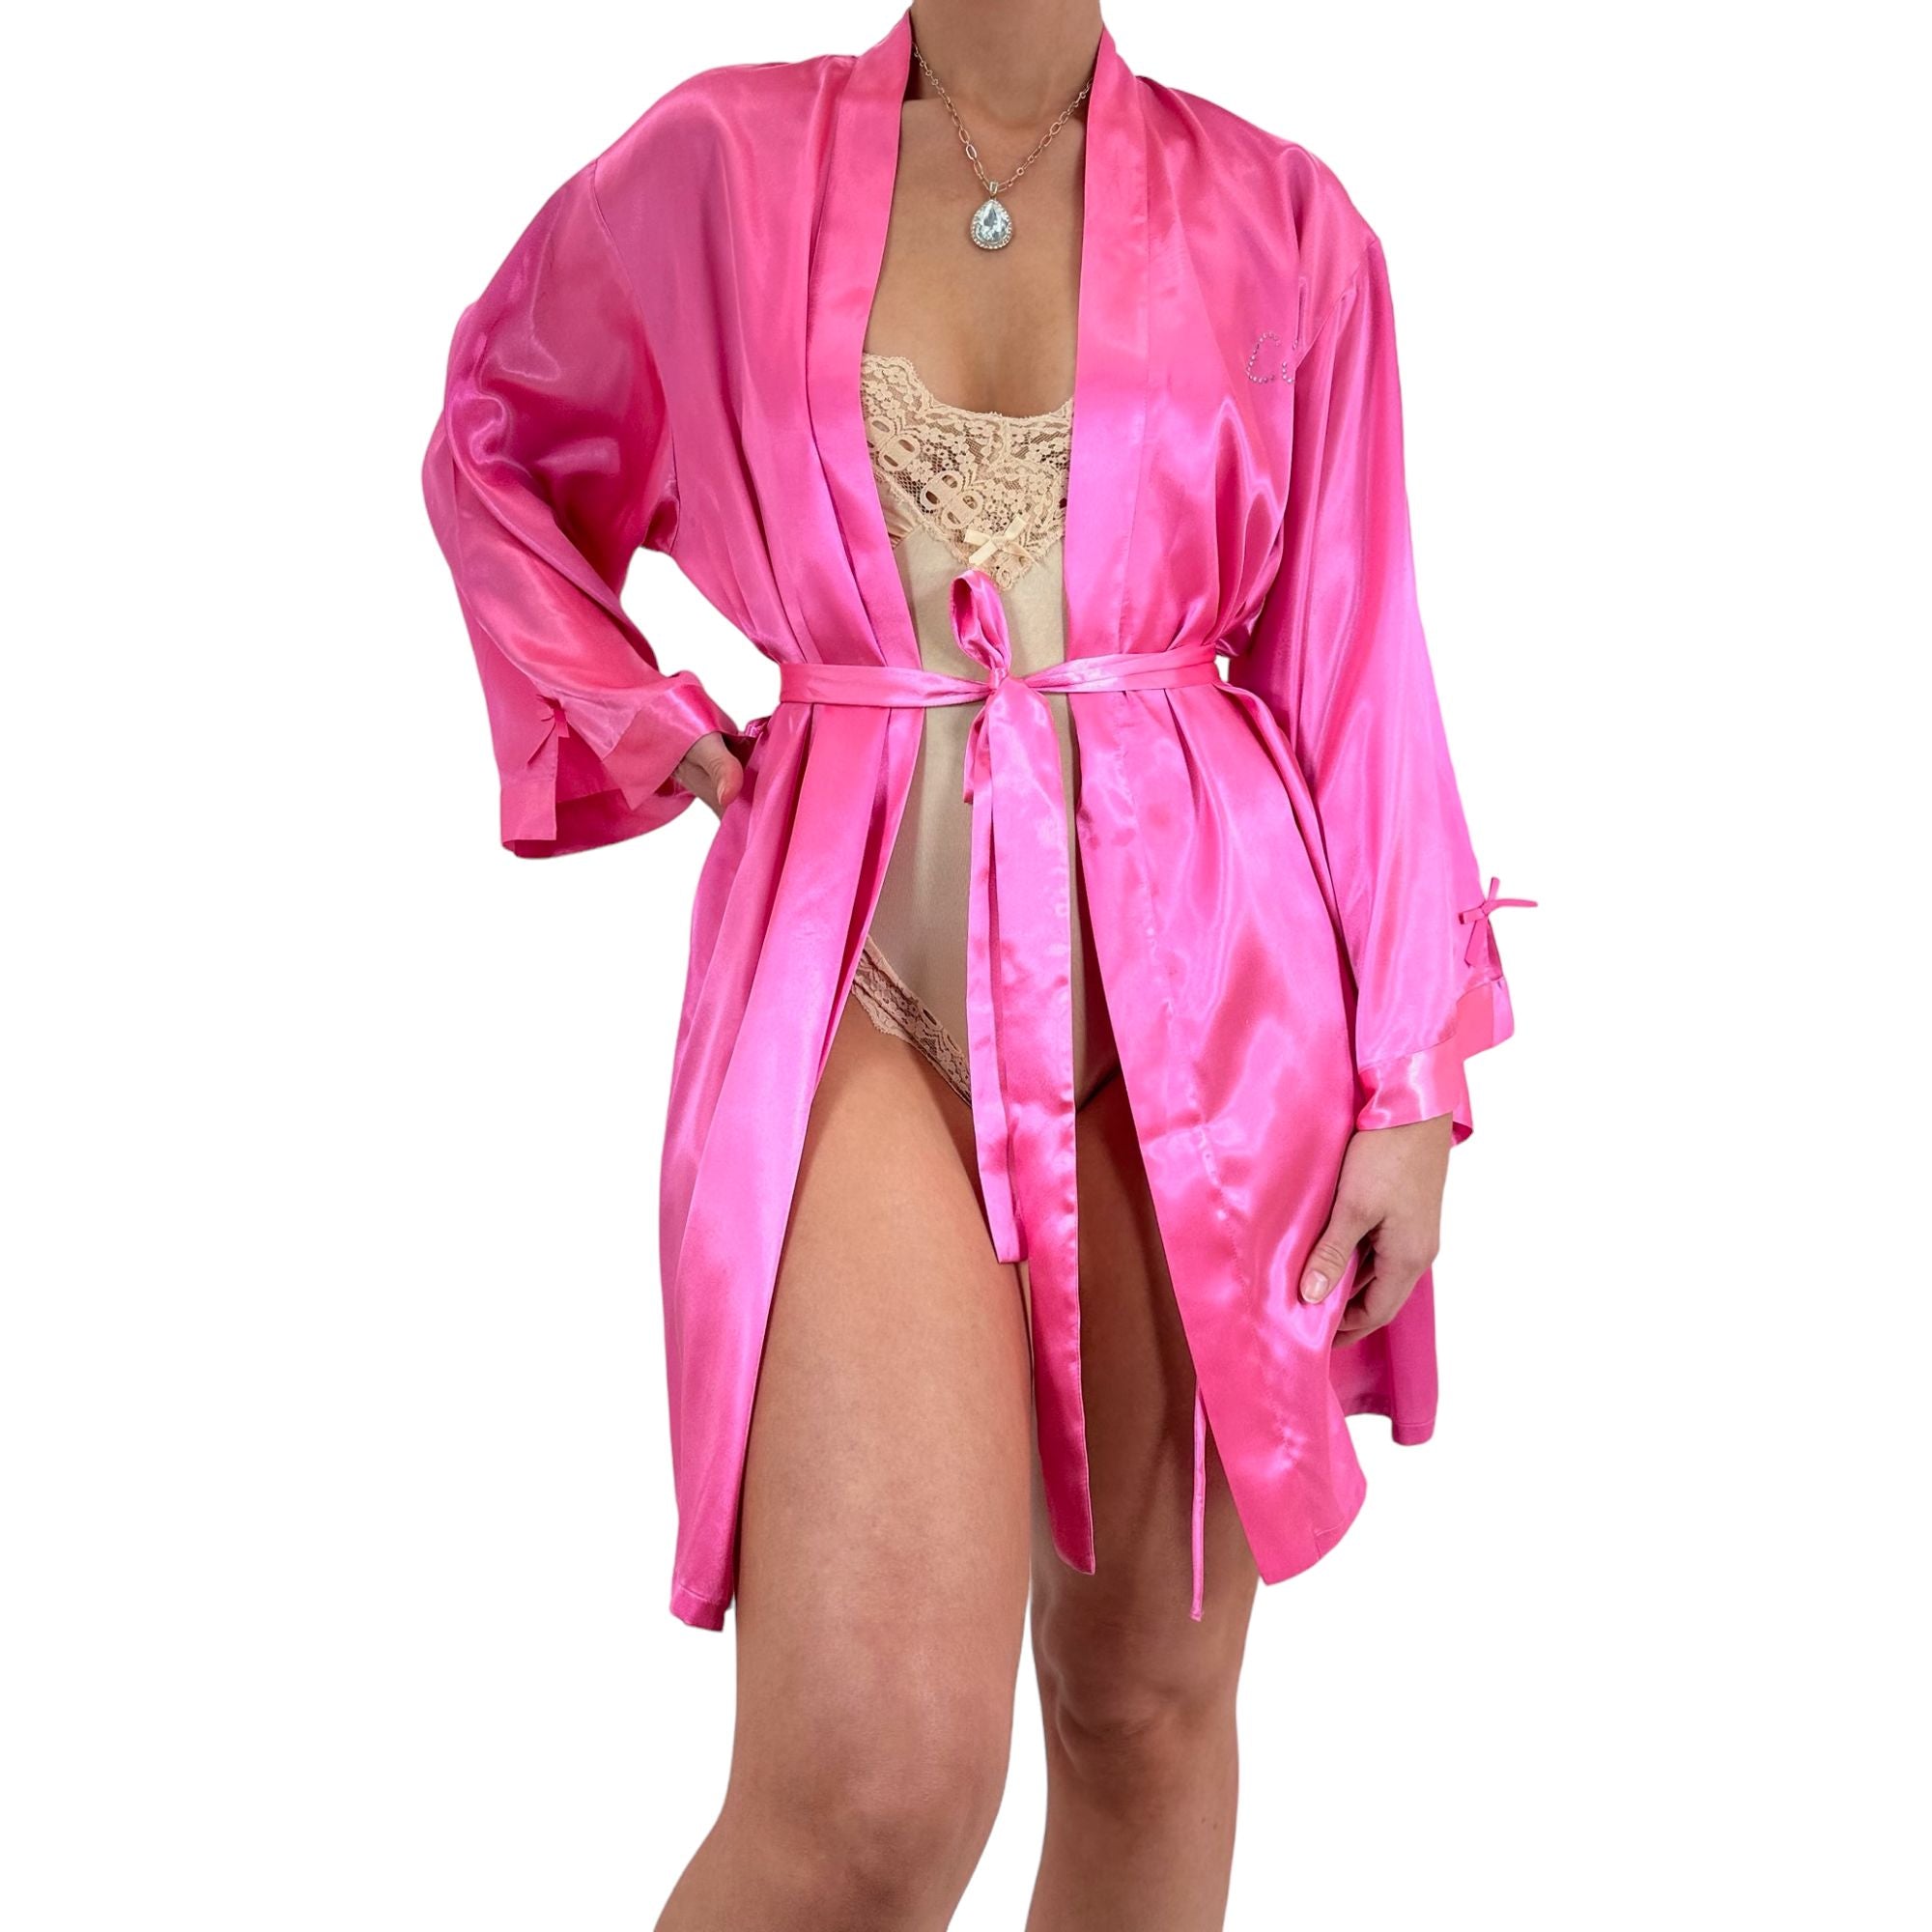 Y2k Vintage Hot Pink Satin Robe [M-L]